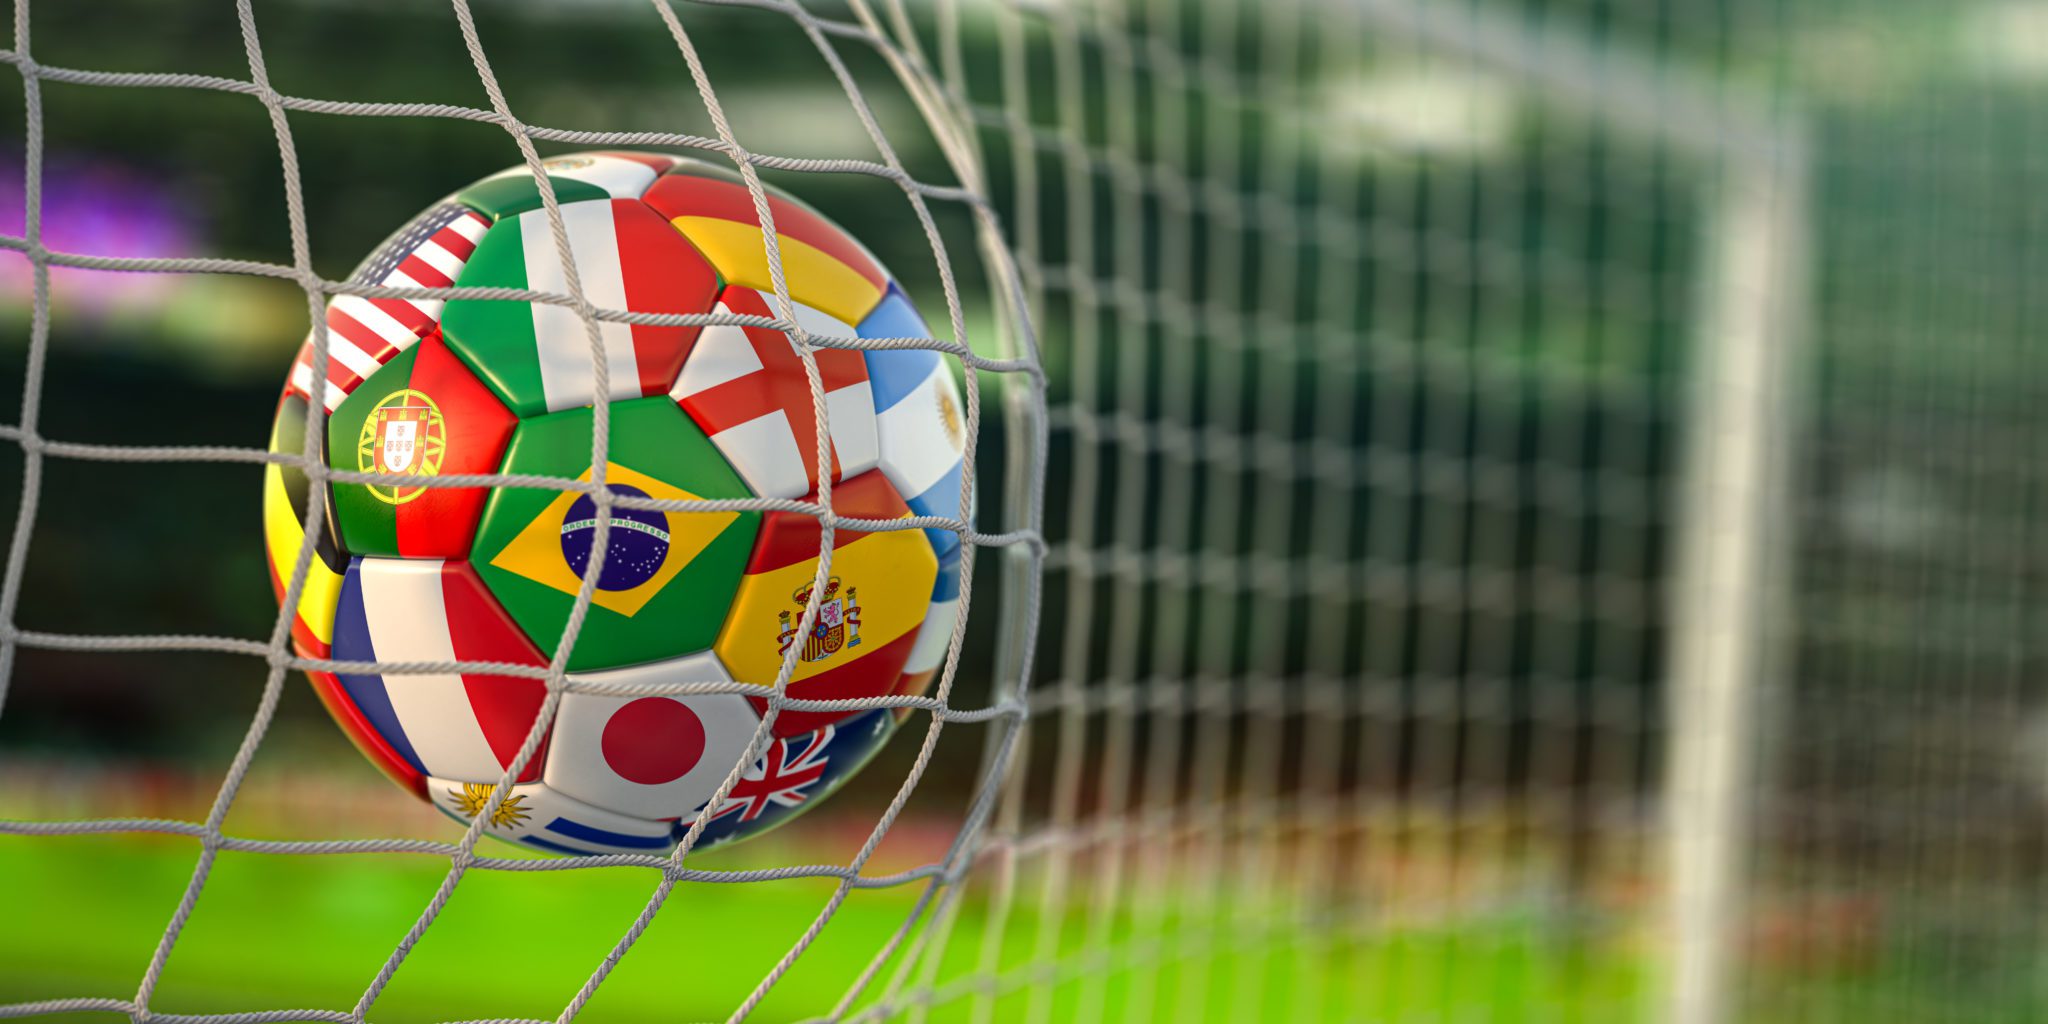 Copa do Mundo: Confira o resumo e as estatísticas dos jogos desta